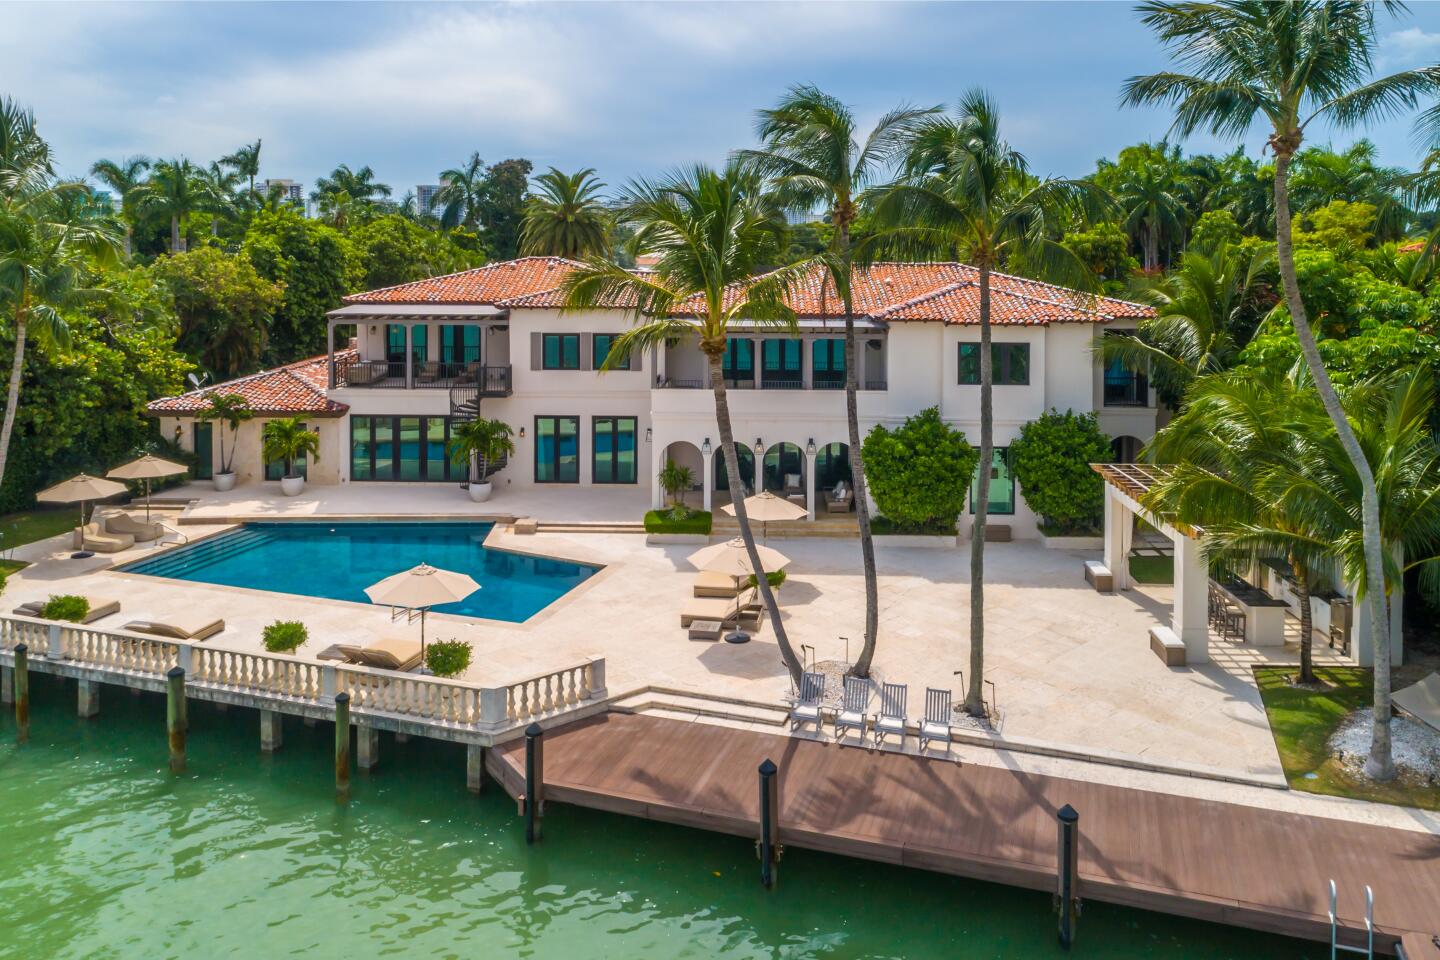 Dwyane Wade sells Miami Beach mansion for $22 million – Celebrity